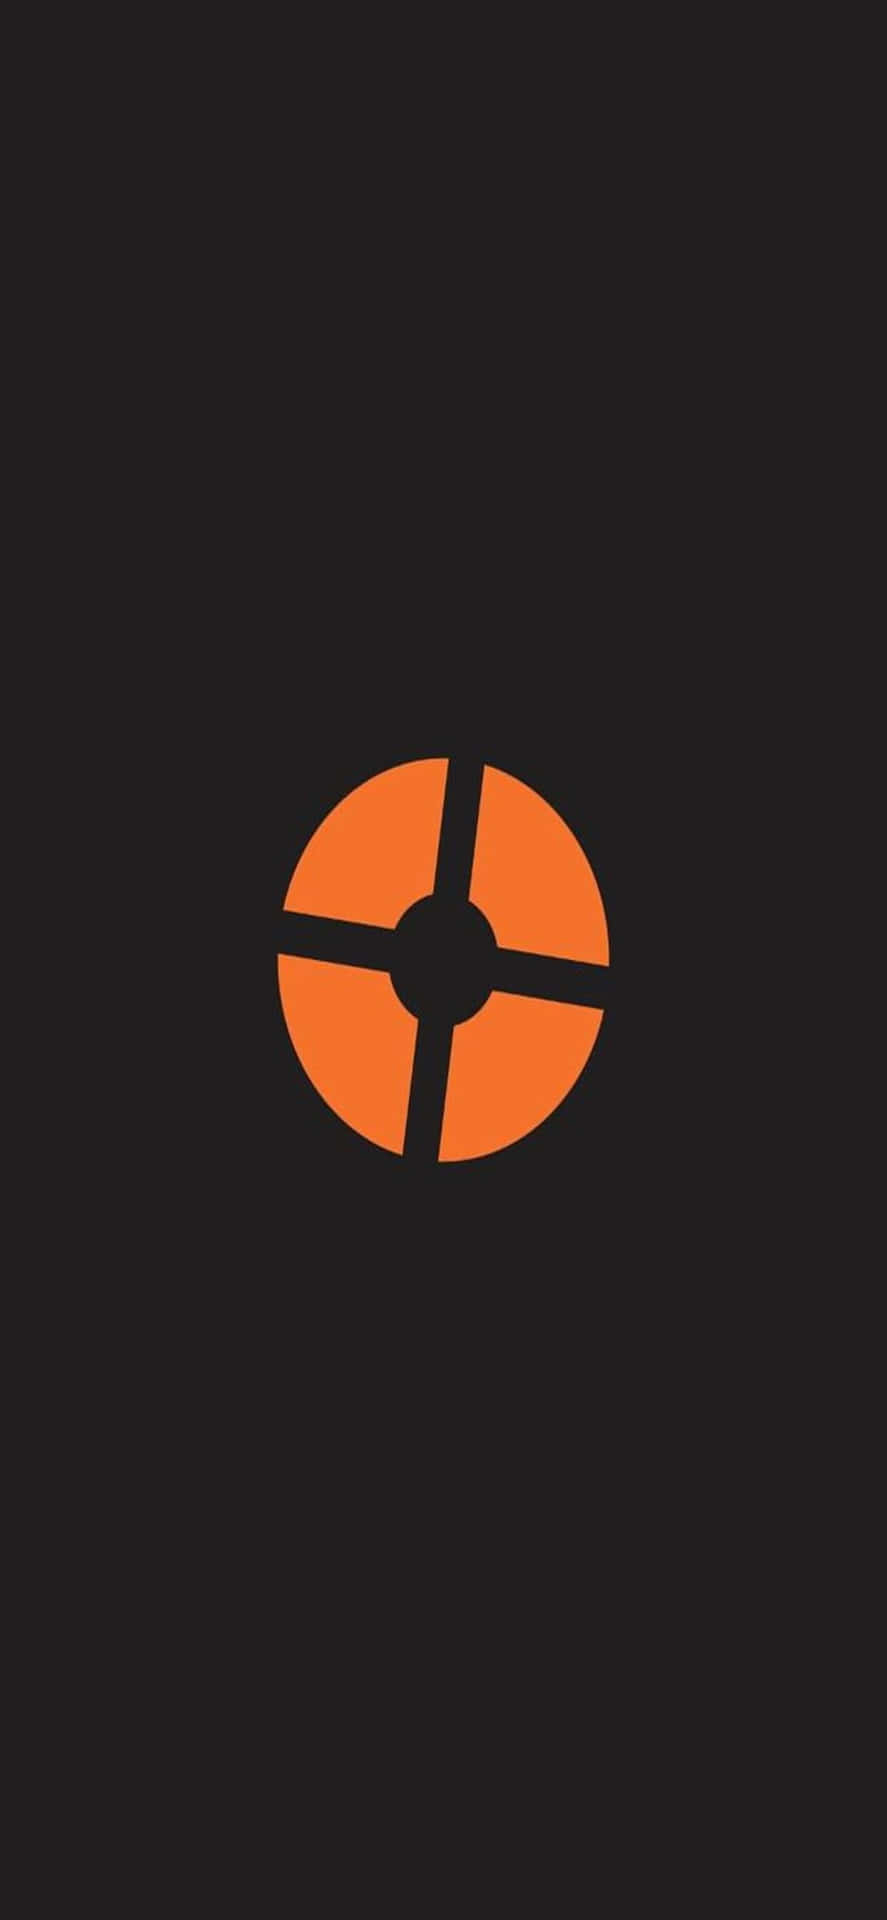 a black background with an orange logo